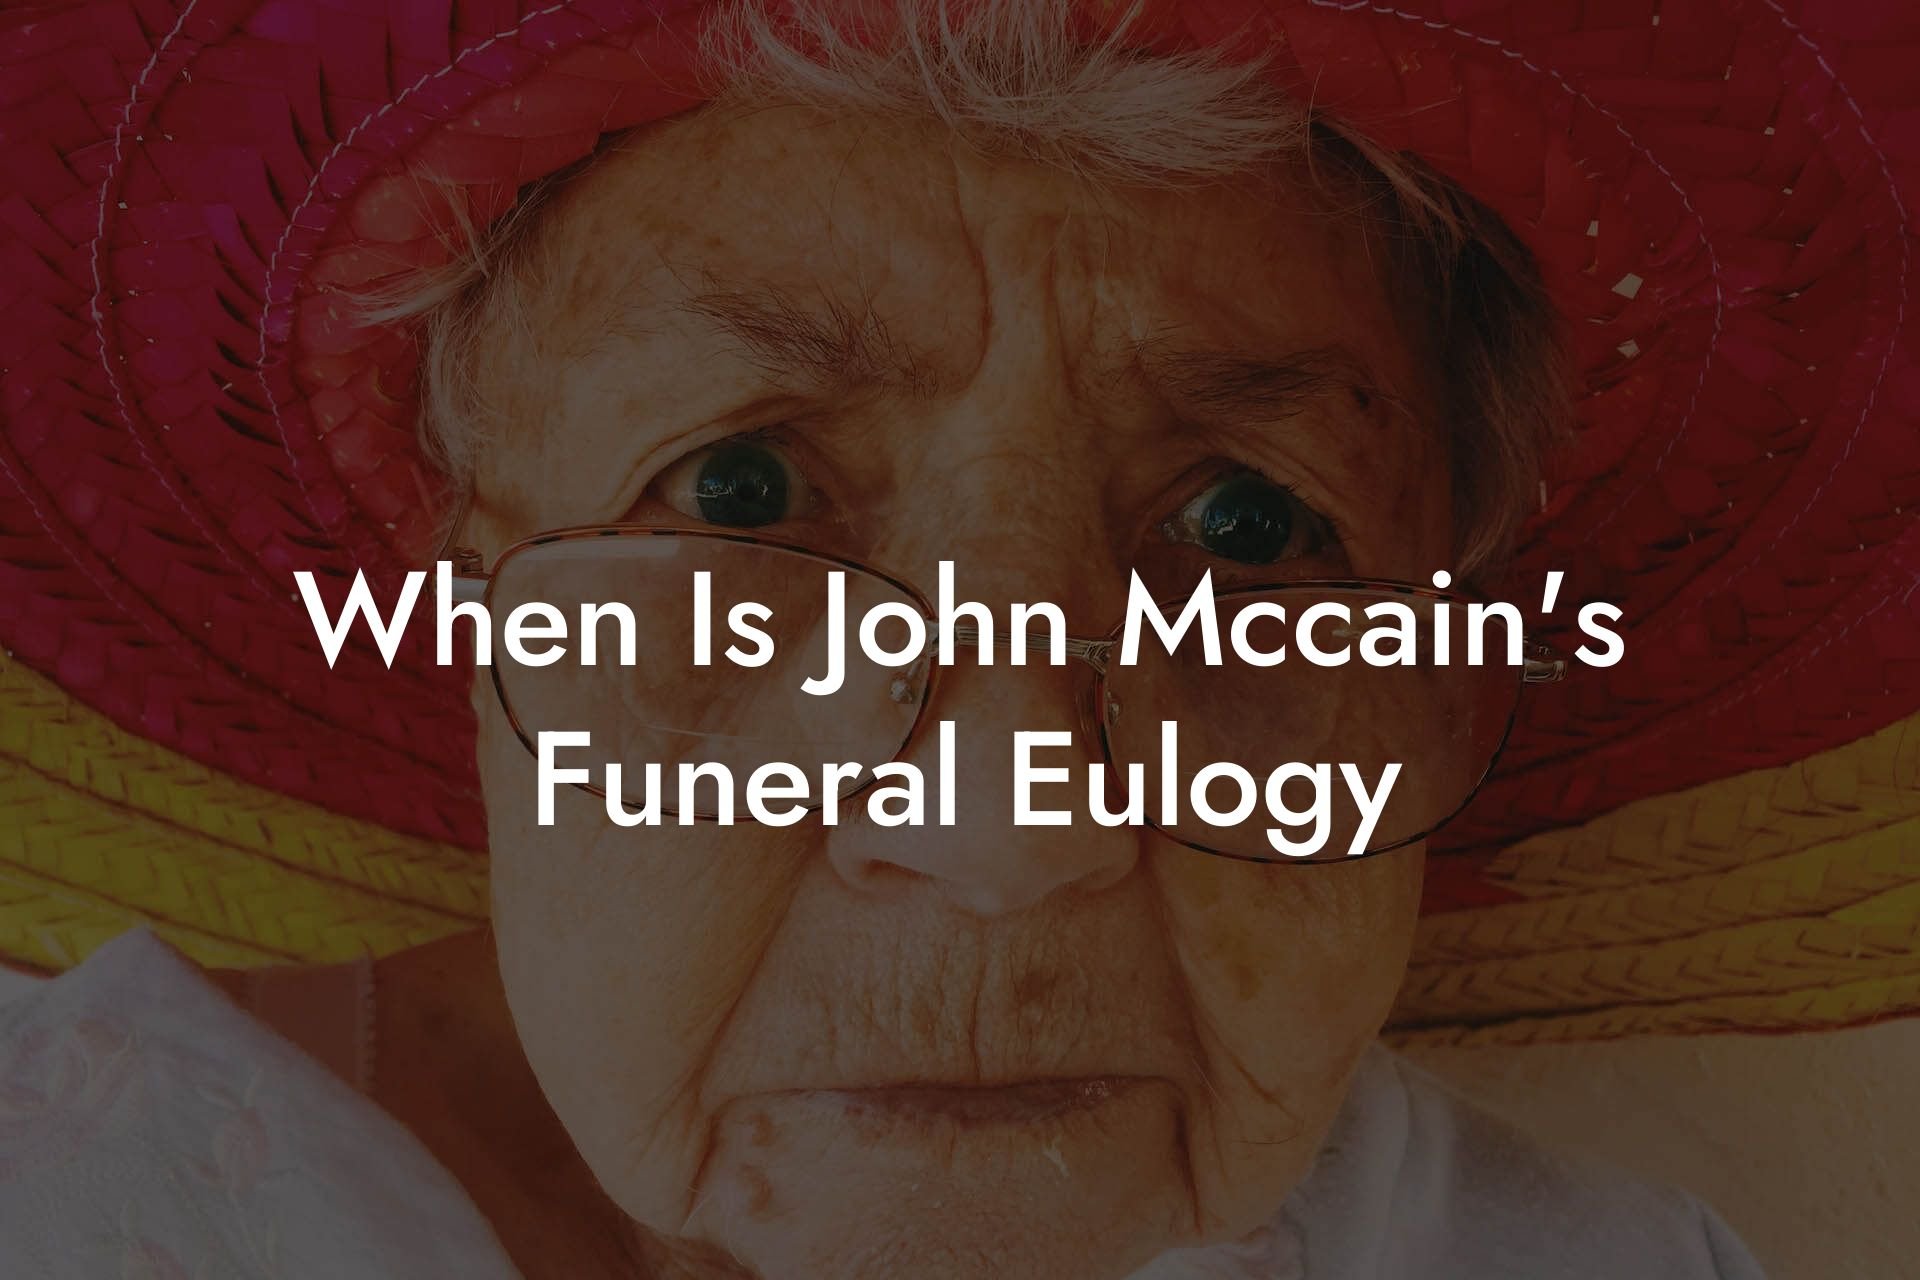 When Is John Mccain's Funeral Eulogy